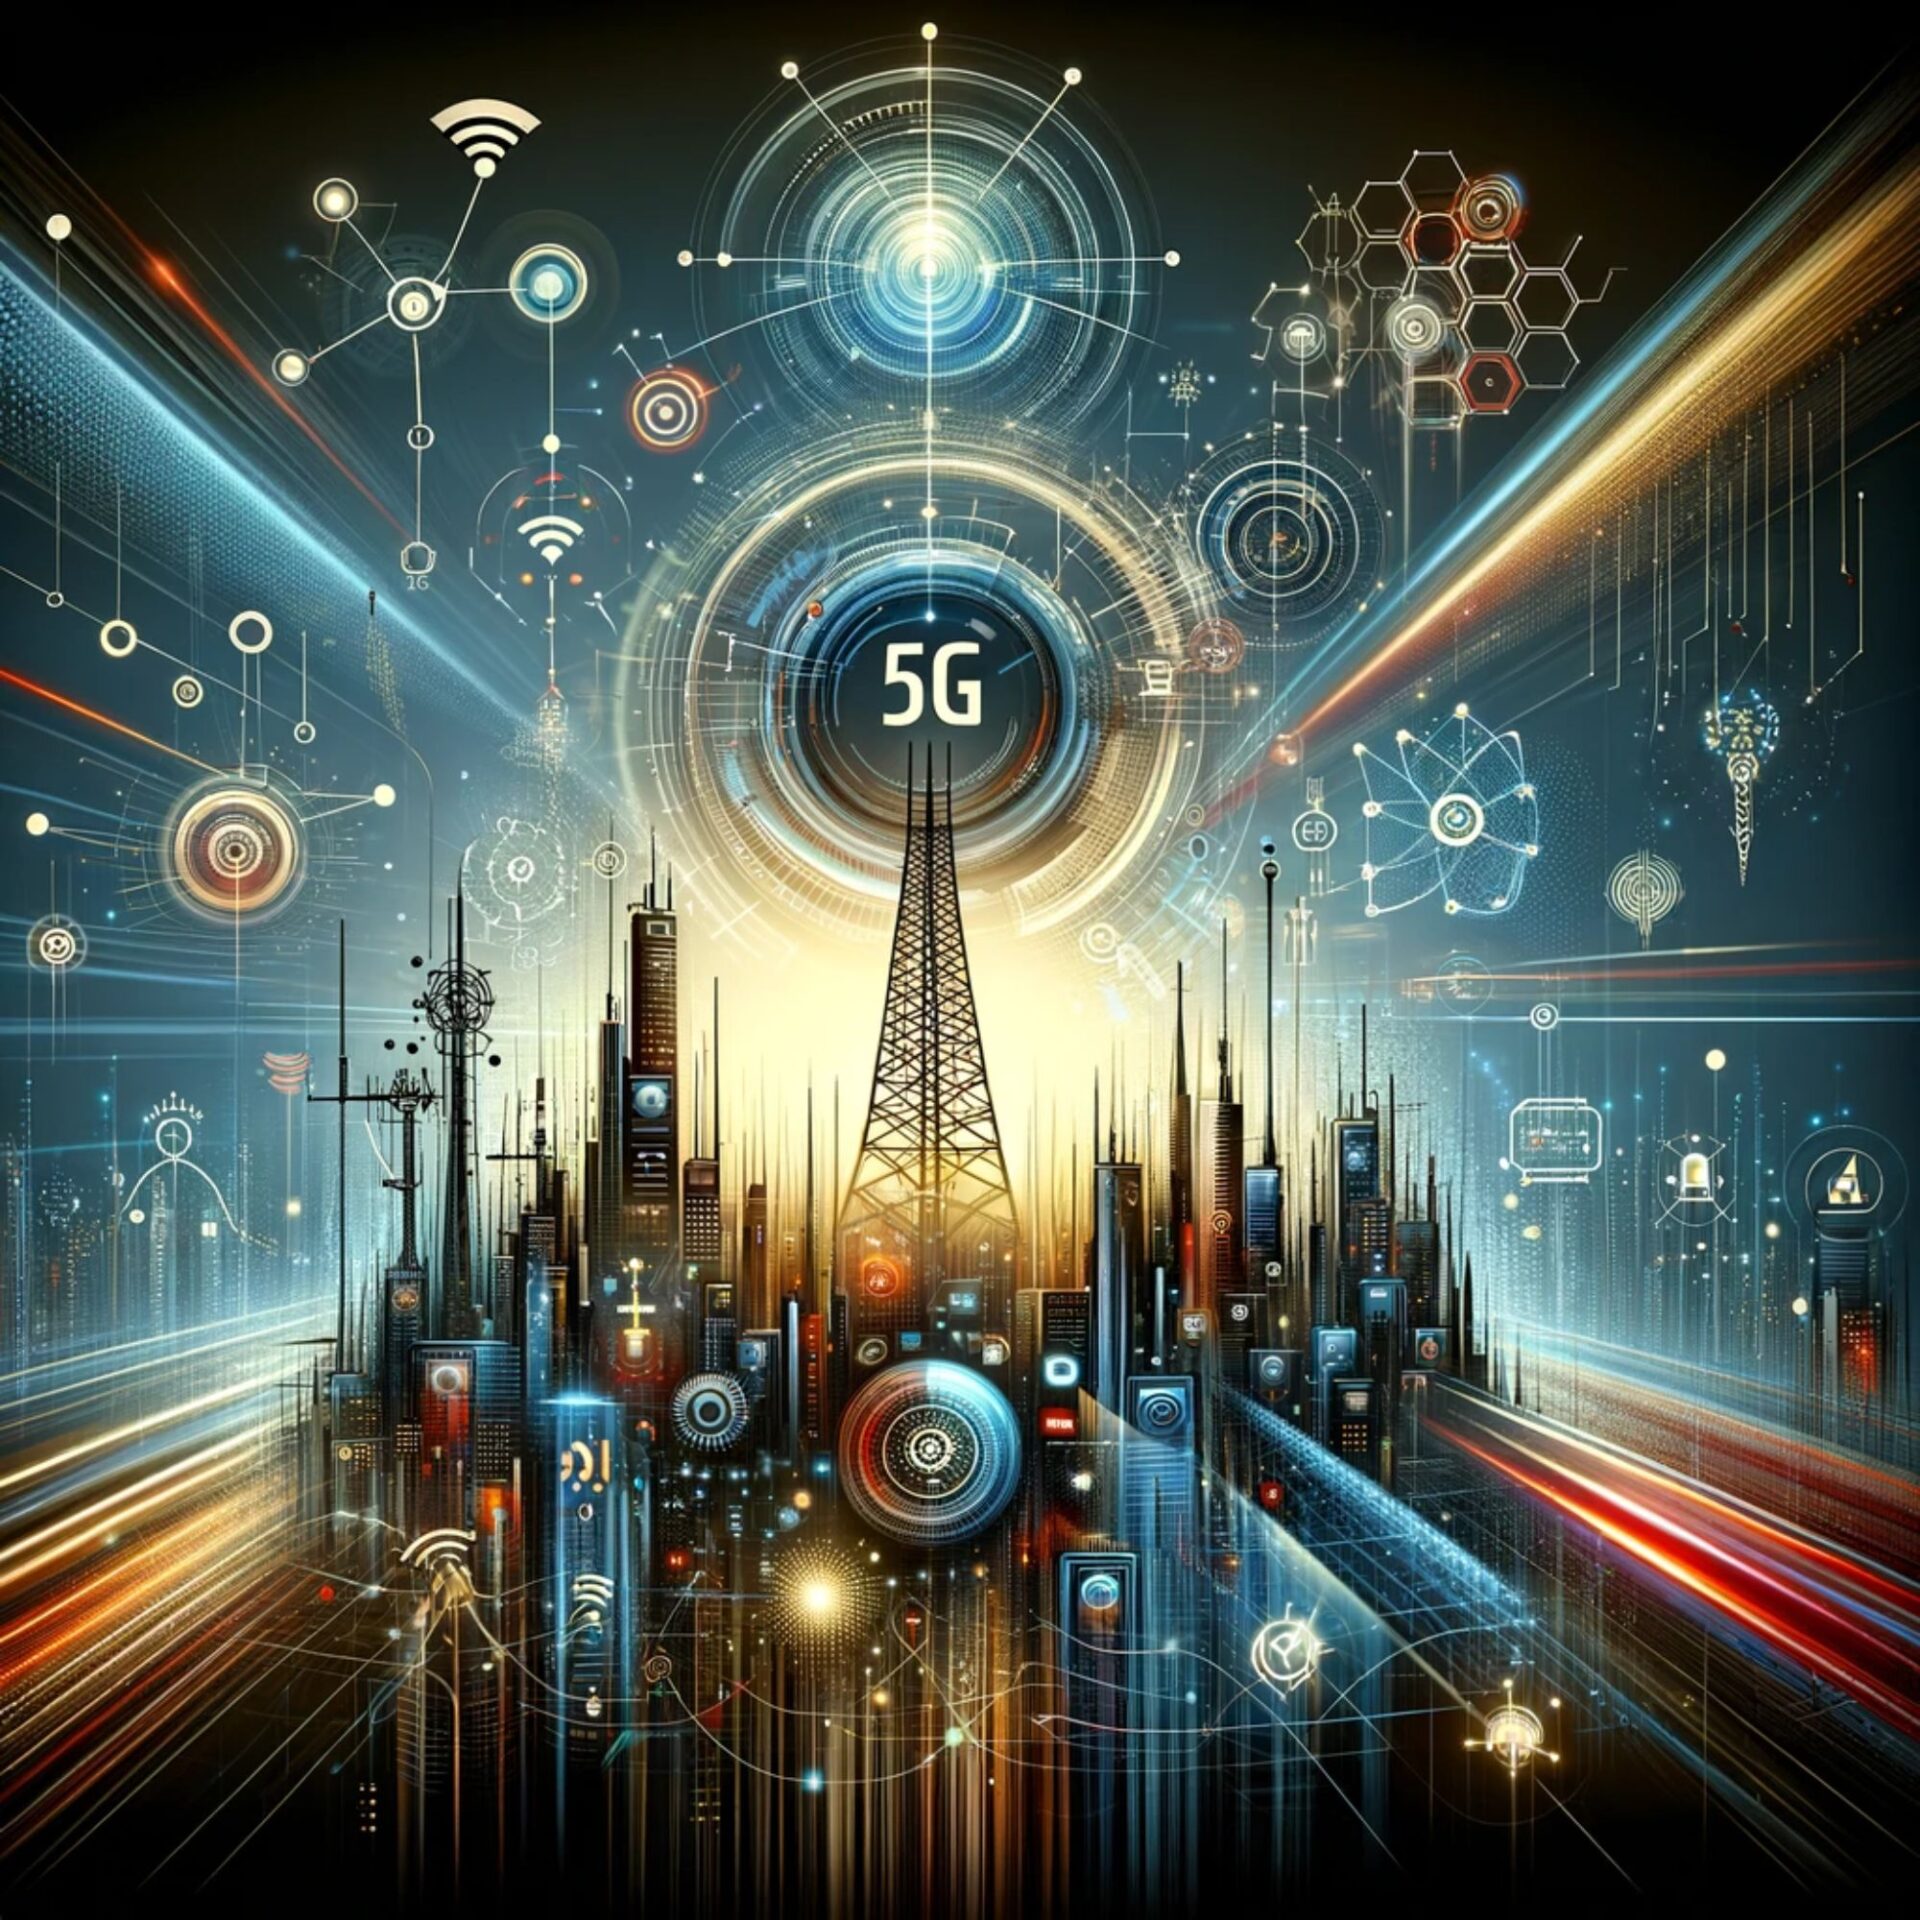 Wireless Communication Standards 5G and Beyond